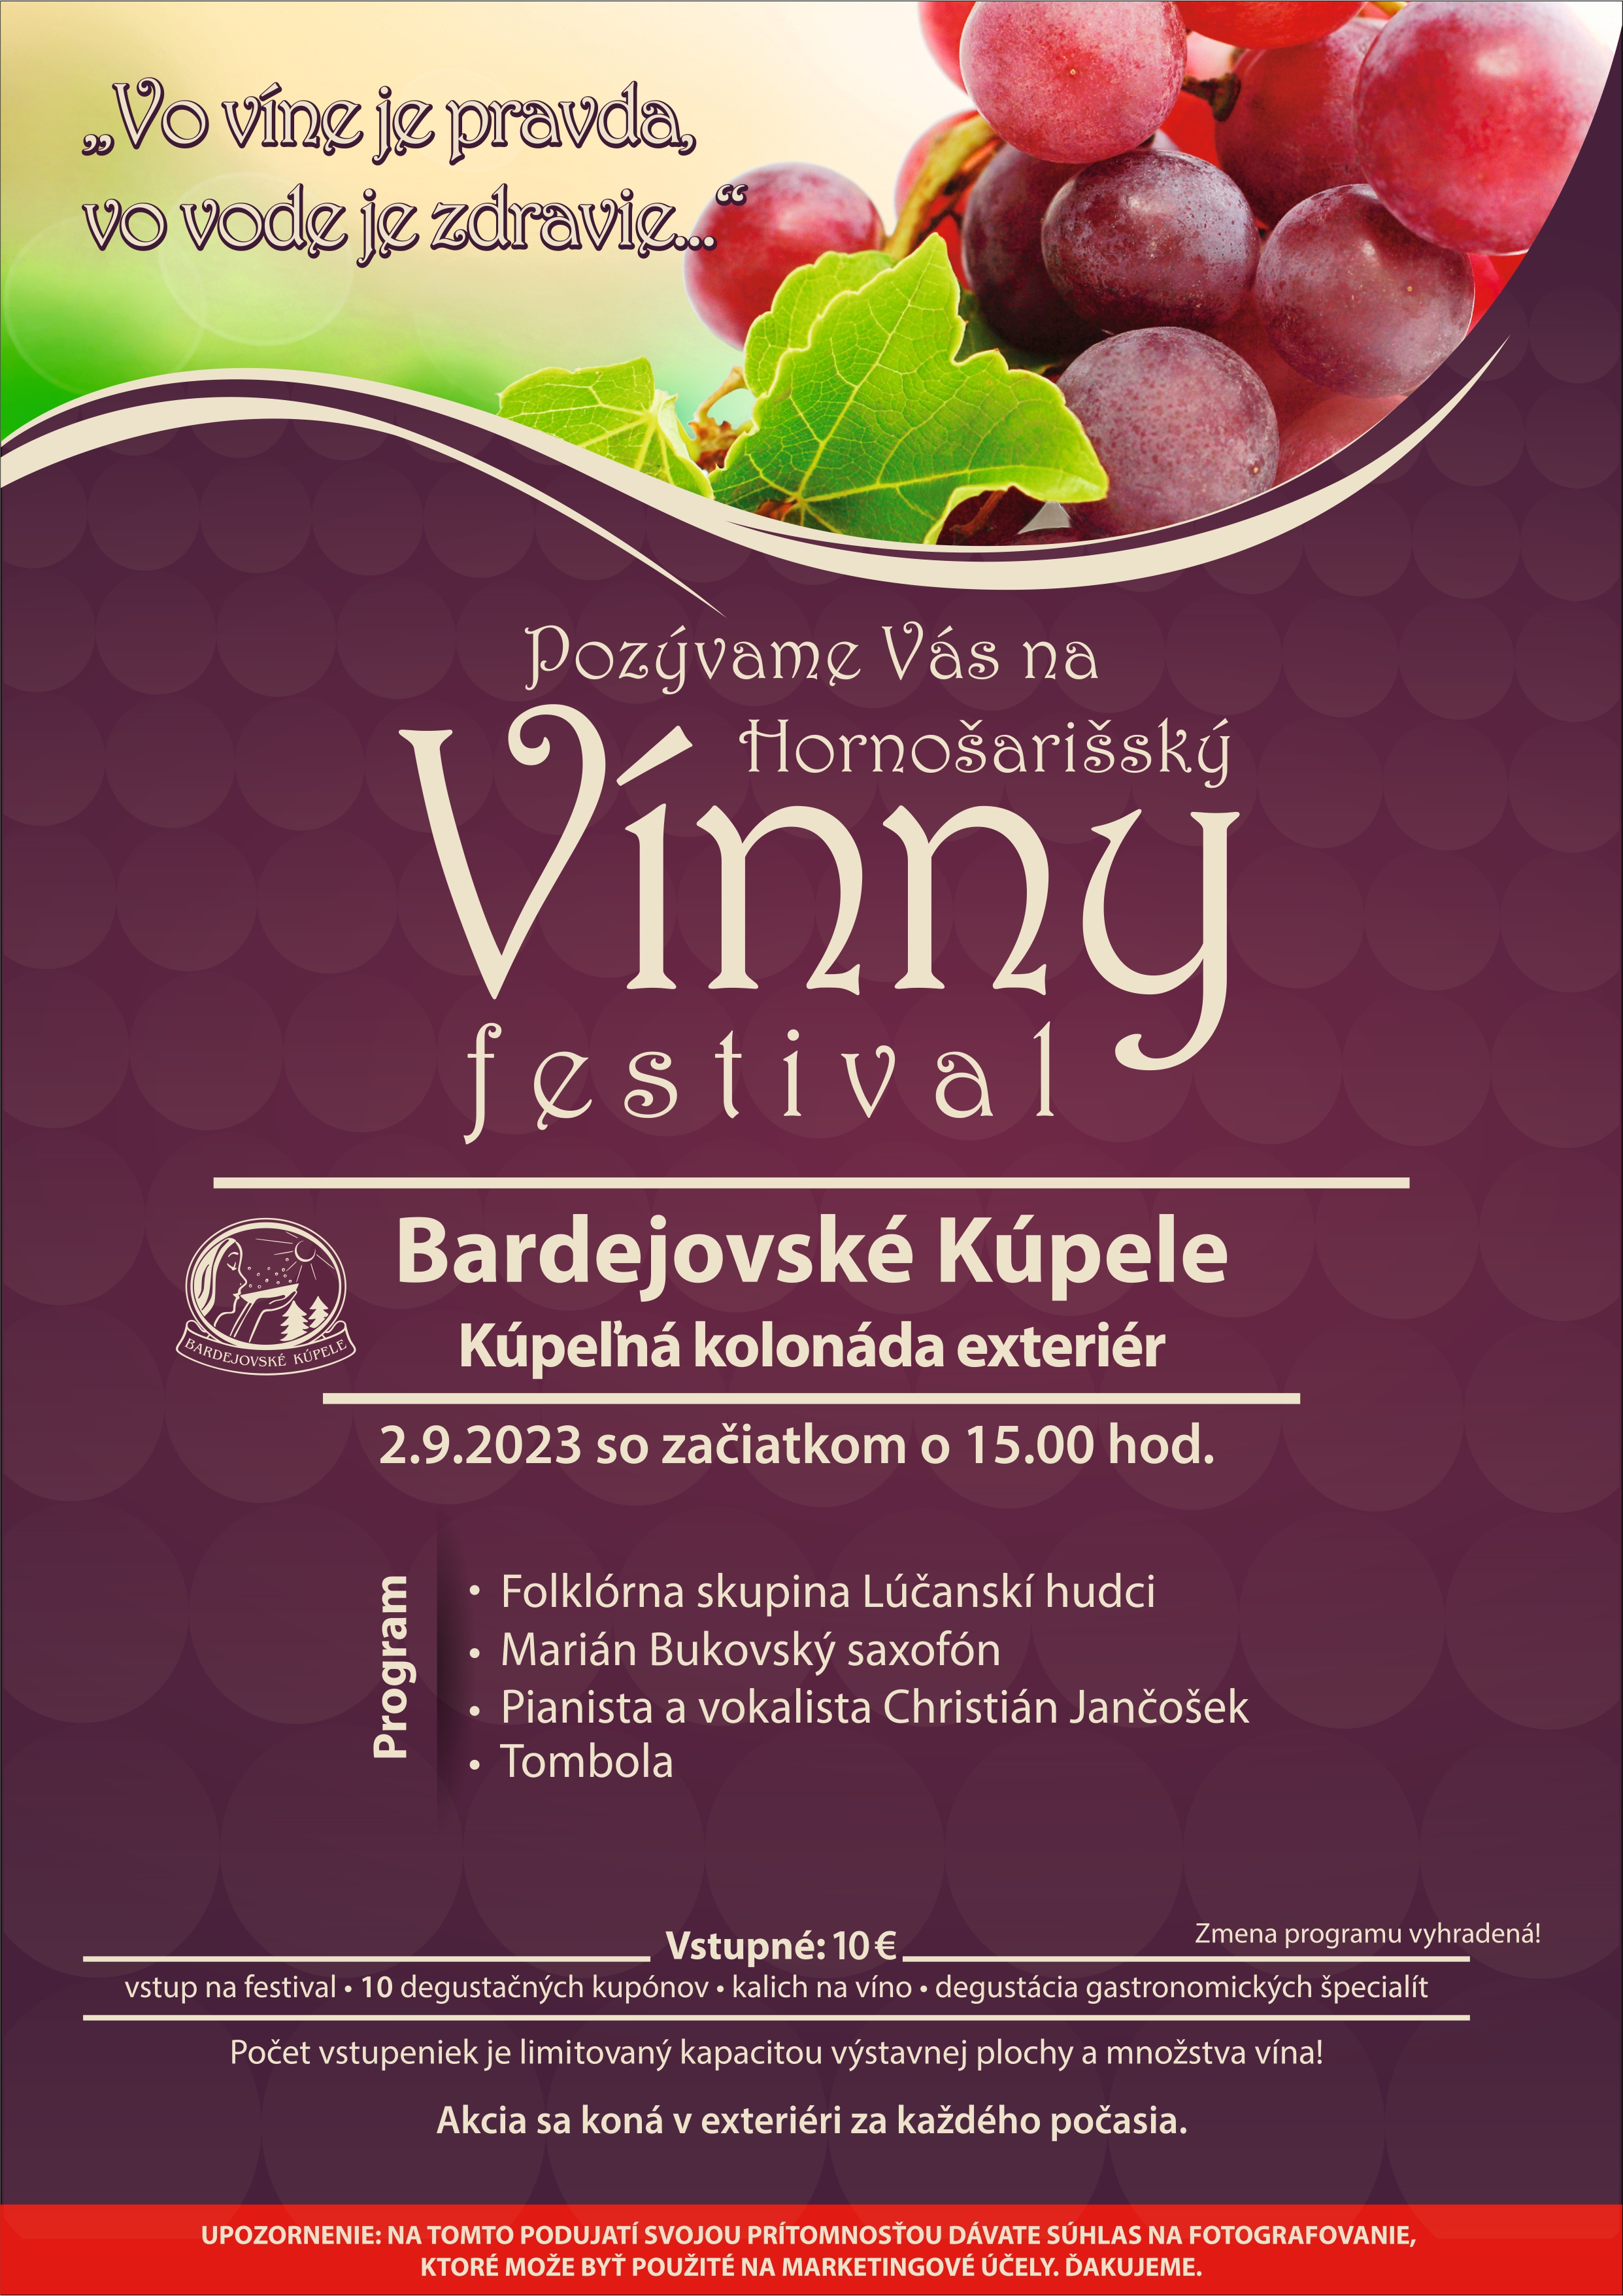 Hornoarisk vnny festival 2023 Bardejov